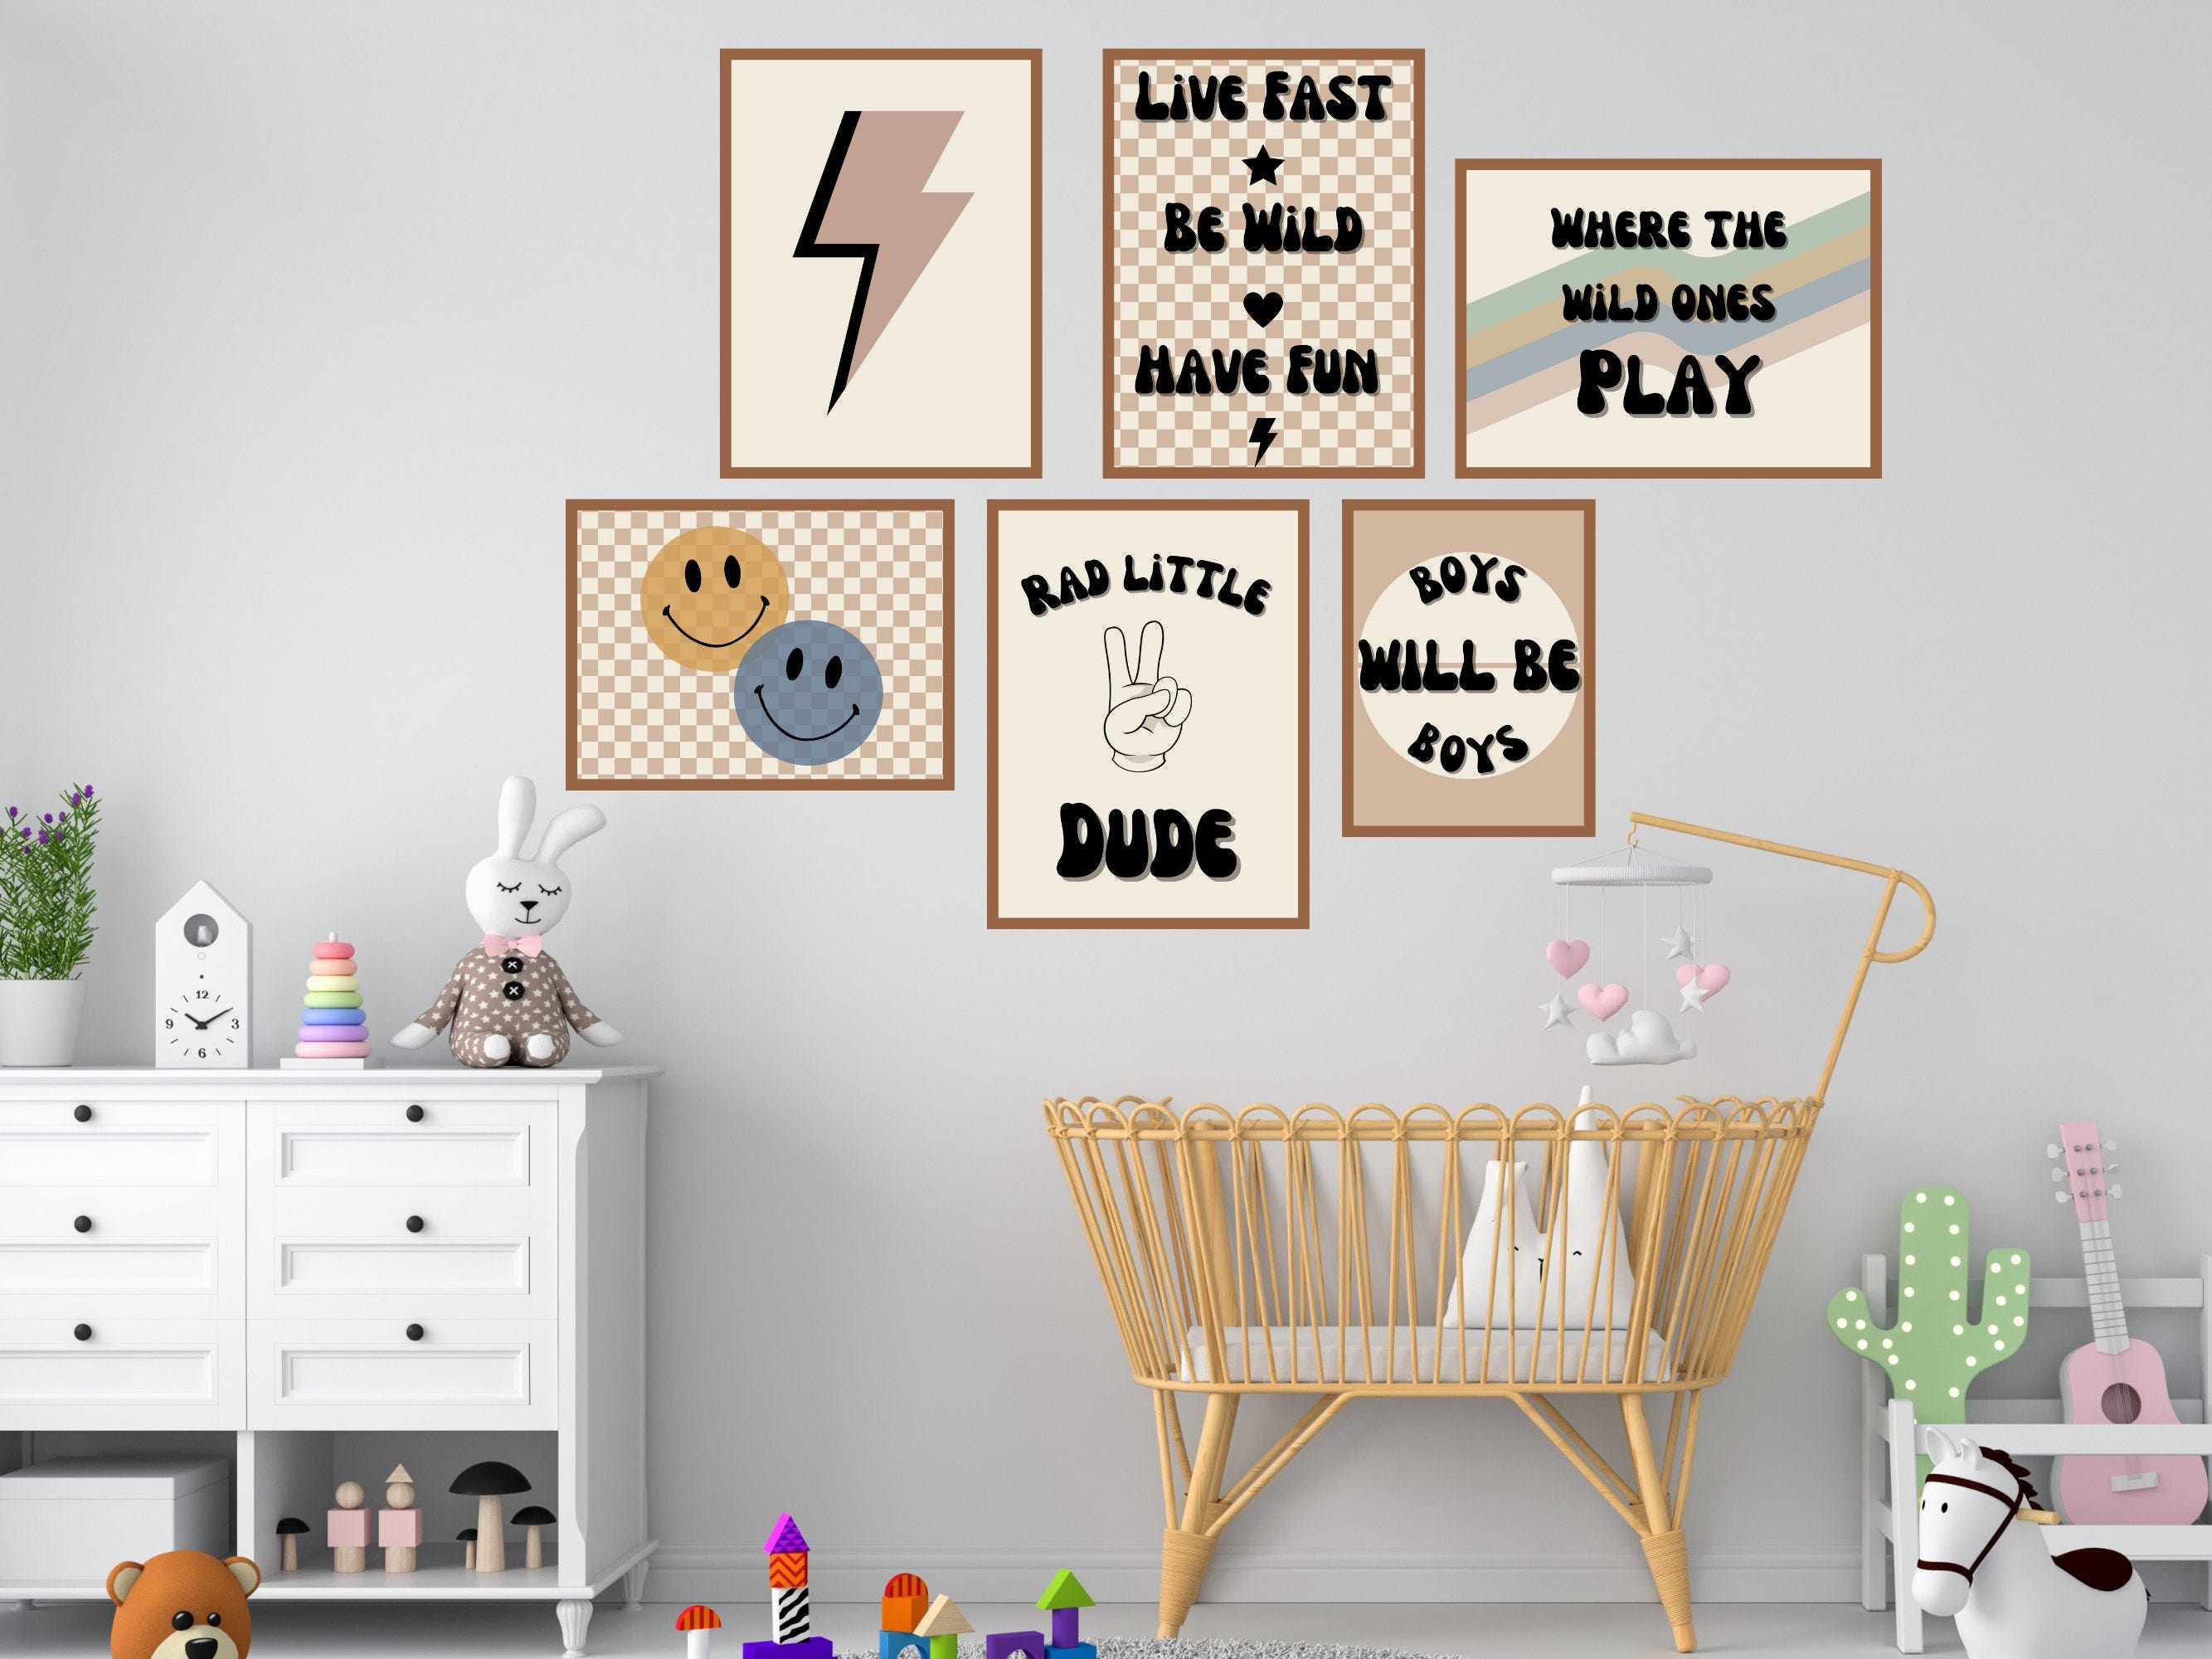 Rad Little Dude Wild Boys Will Be Boys Wall Art - Printable Digital Download - Nursery Boy Room Wall Decor